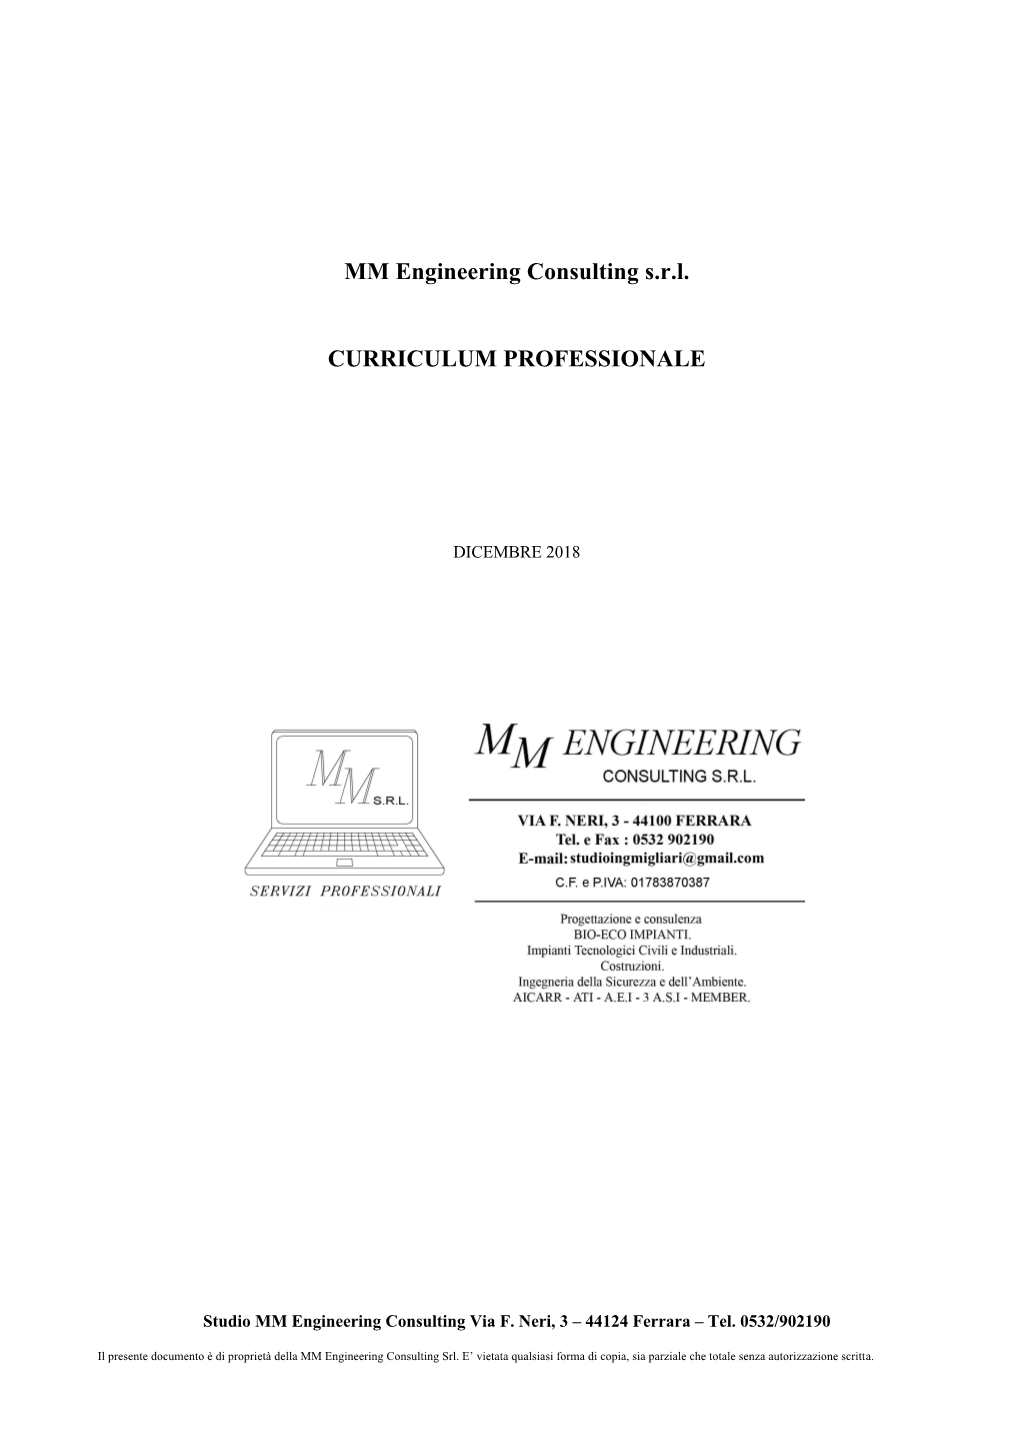 MM Engineering Consulting S.R.L. CURRICULUM PROFESSIONALE